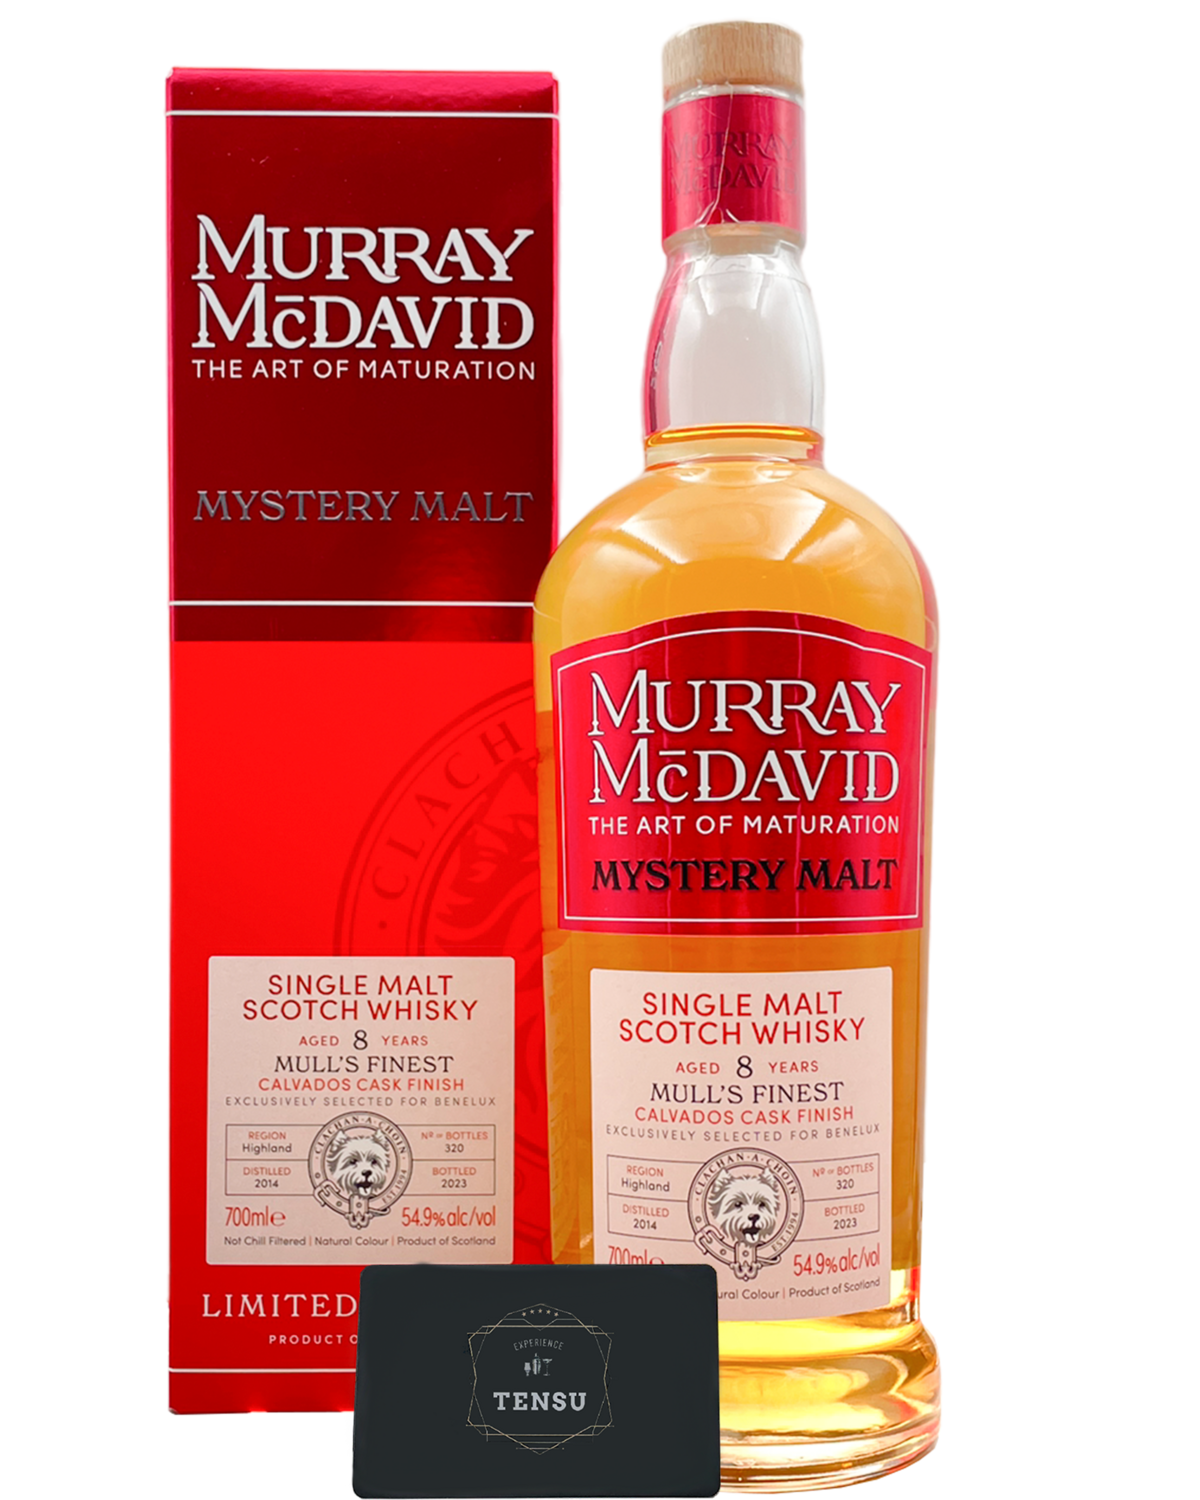 Mystery Malt/Ledaig 8Y Mull's Finest (2014-2023) 54.9 Calvados Cask Finish "Murray McDavid"